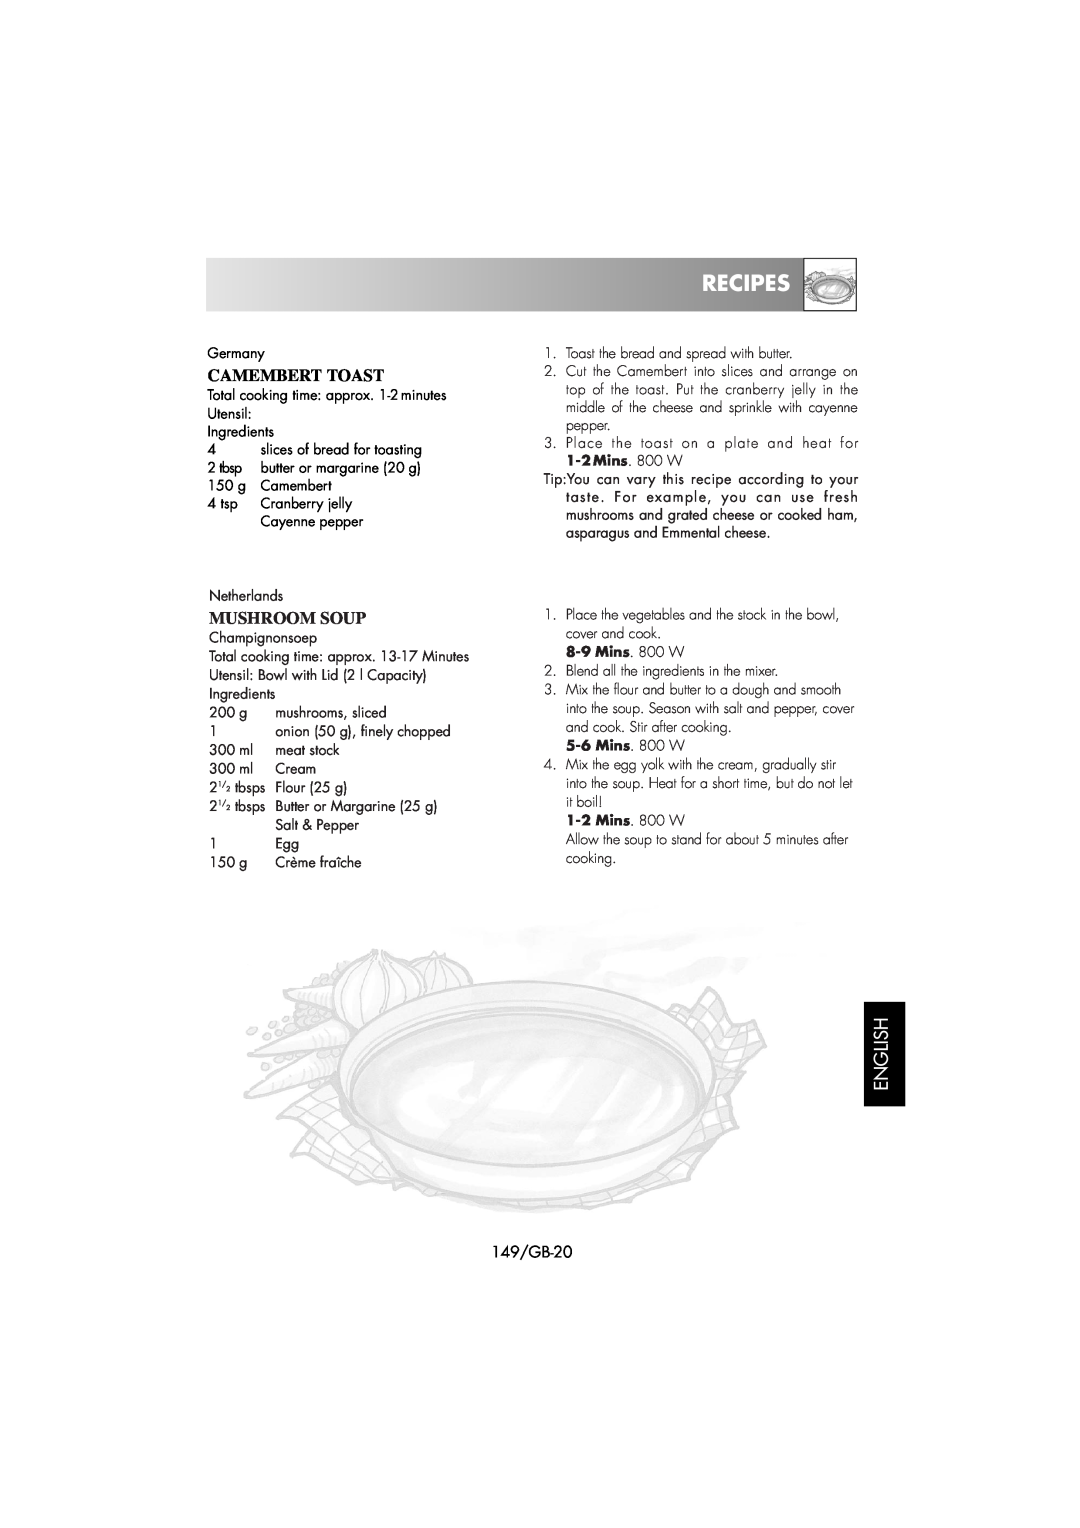 Sharp R-239 operation manual Camembert Toast, Recipes, English, 149/GB-20 